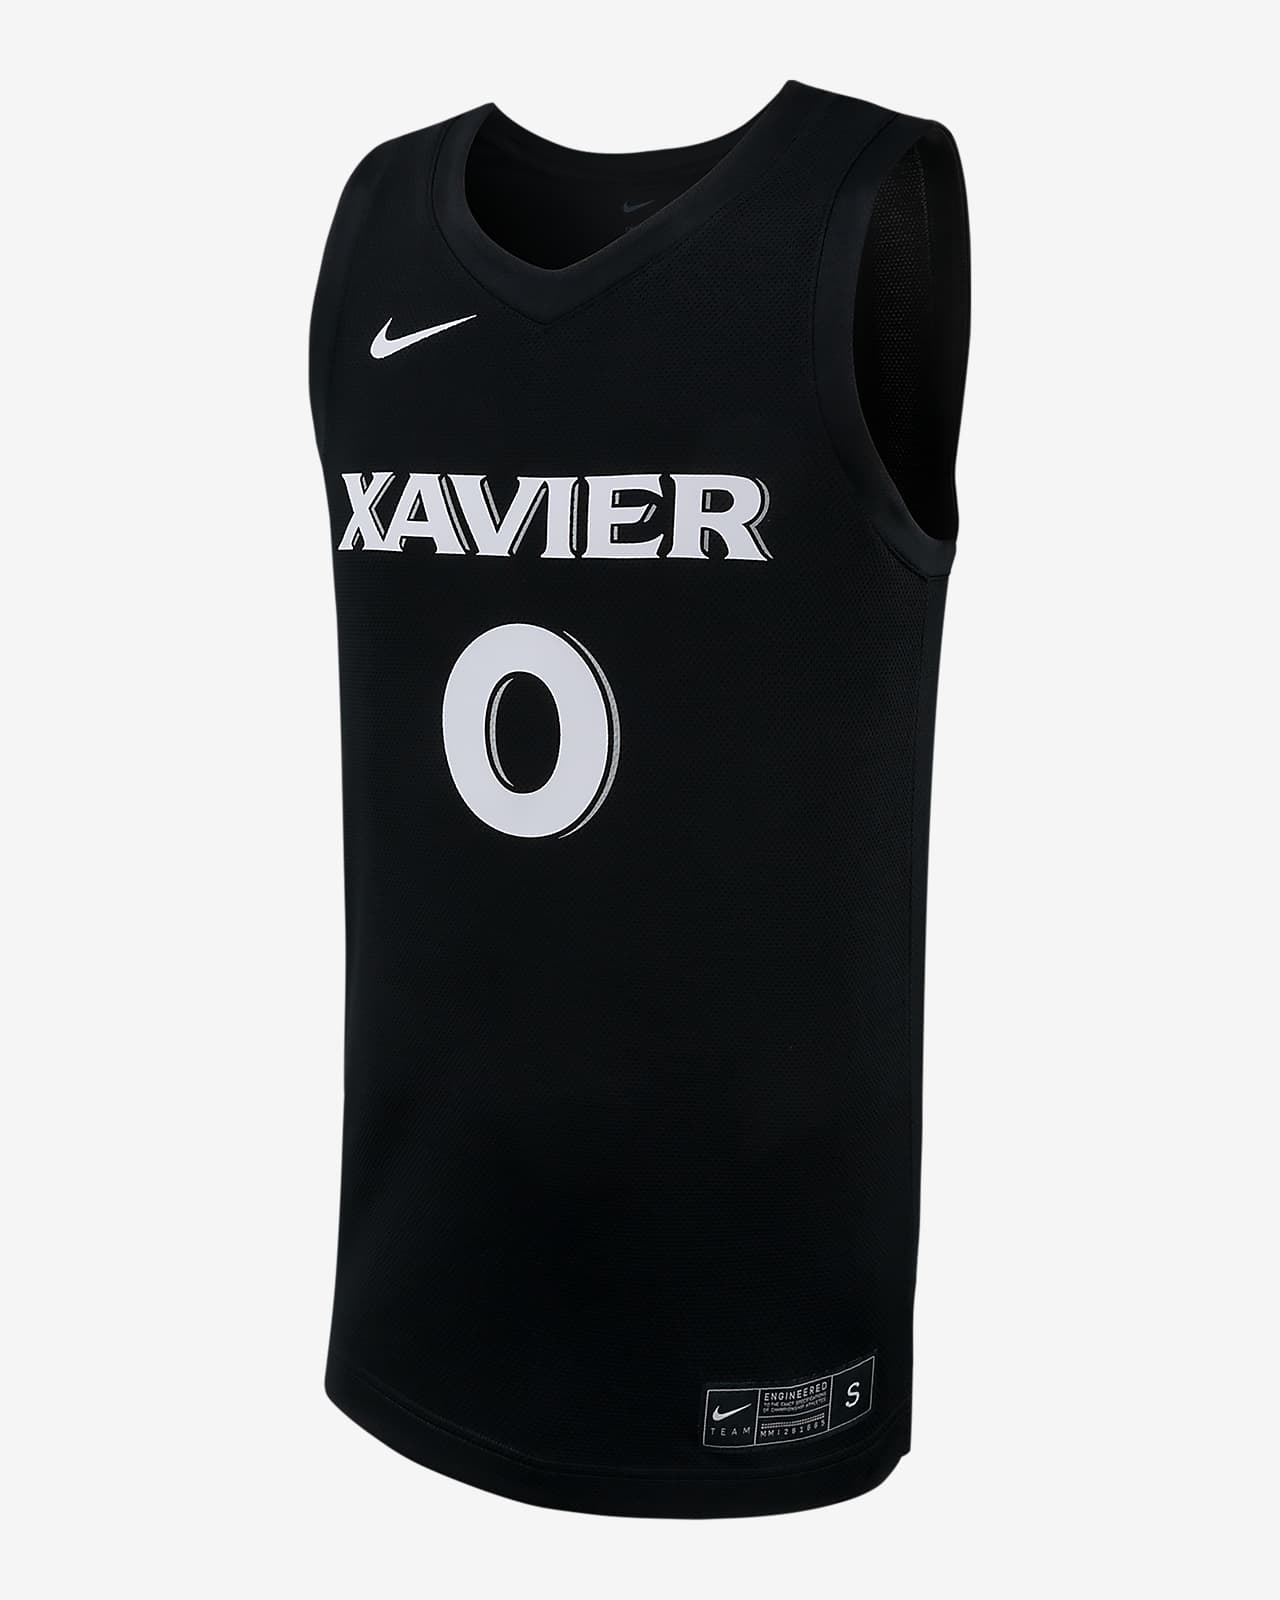 Xavier Men's Nike College Basketball Replica Jersey